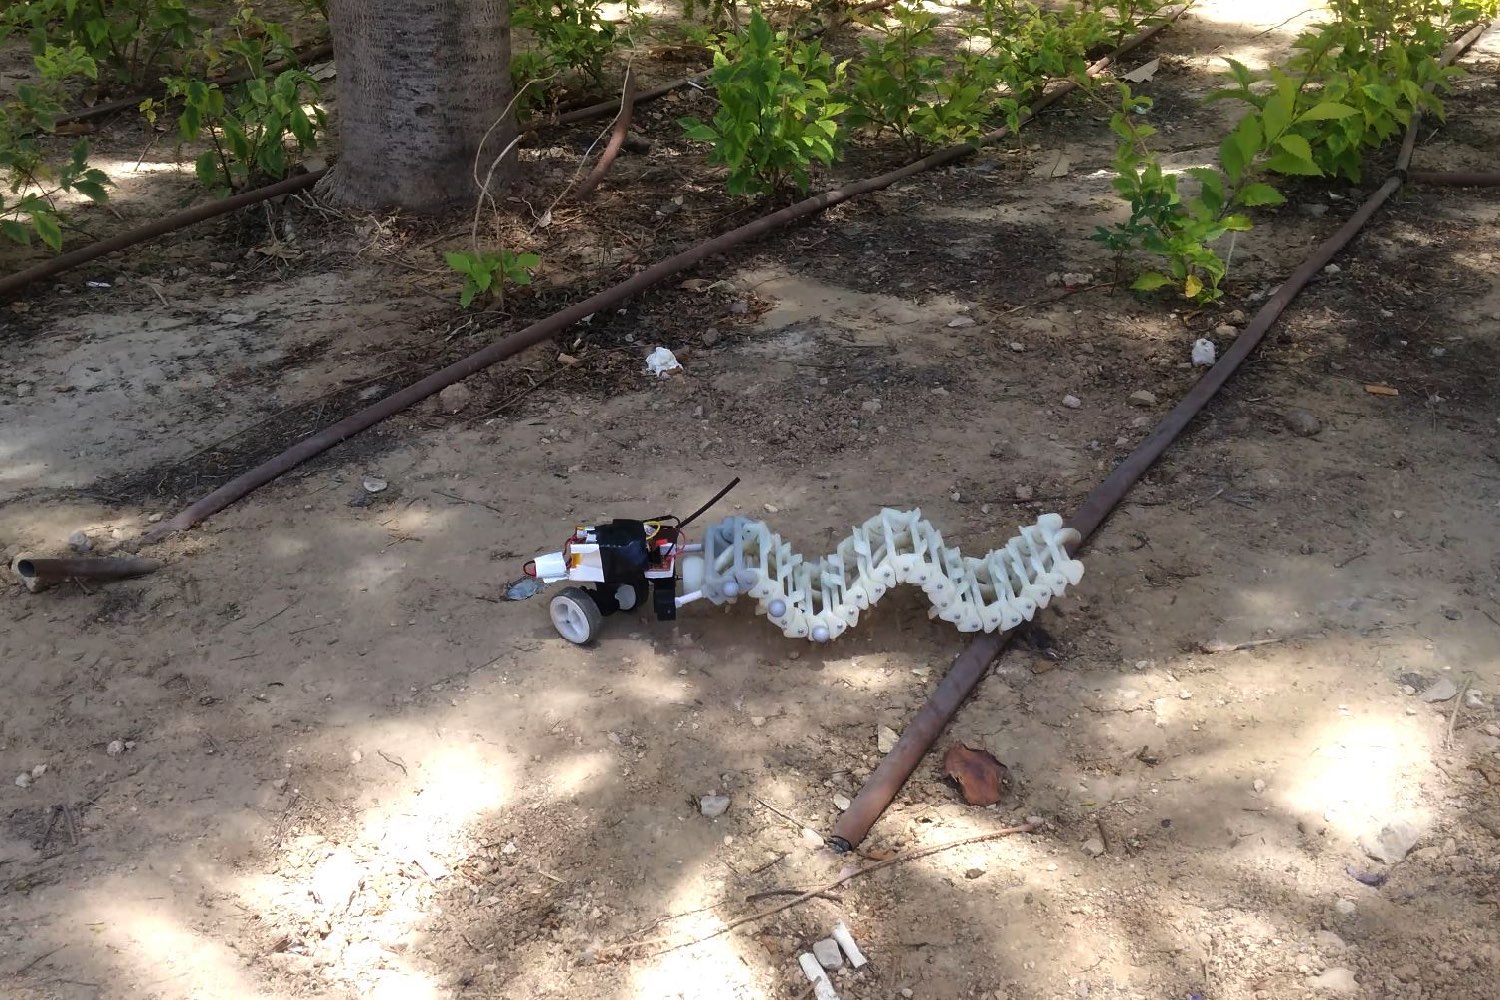 worm robot locomotion on sand 2